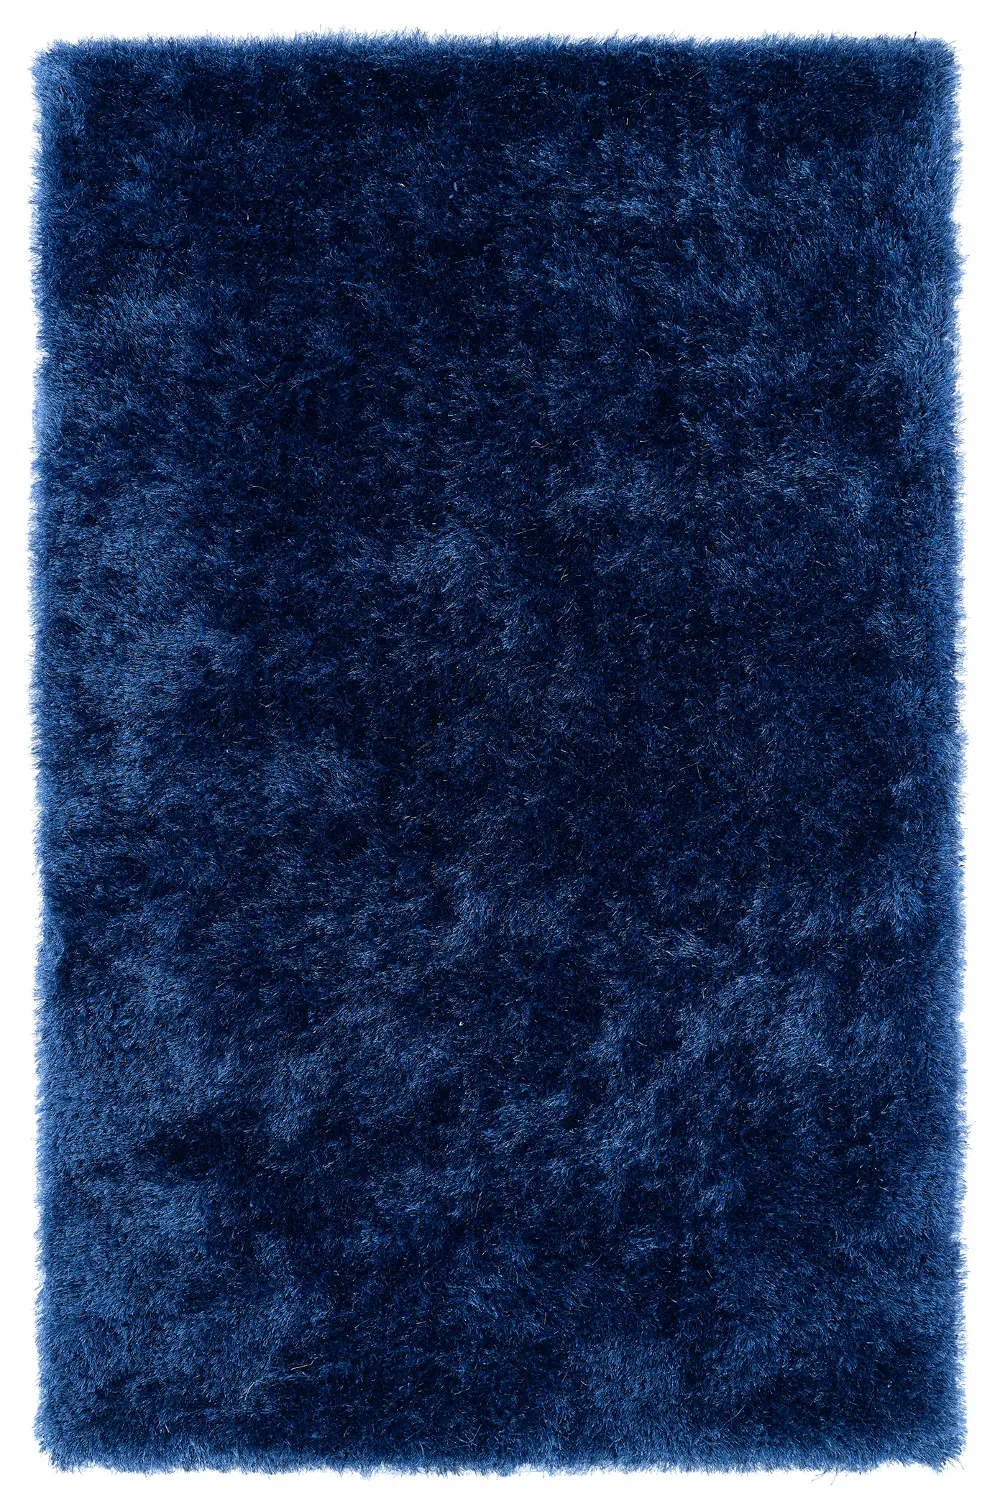 3 x 5 Small Denim Blue Shag Rug - Posh-1